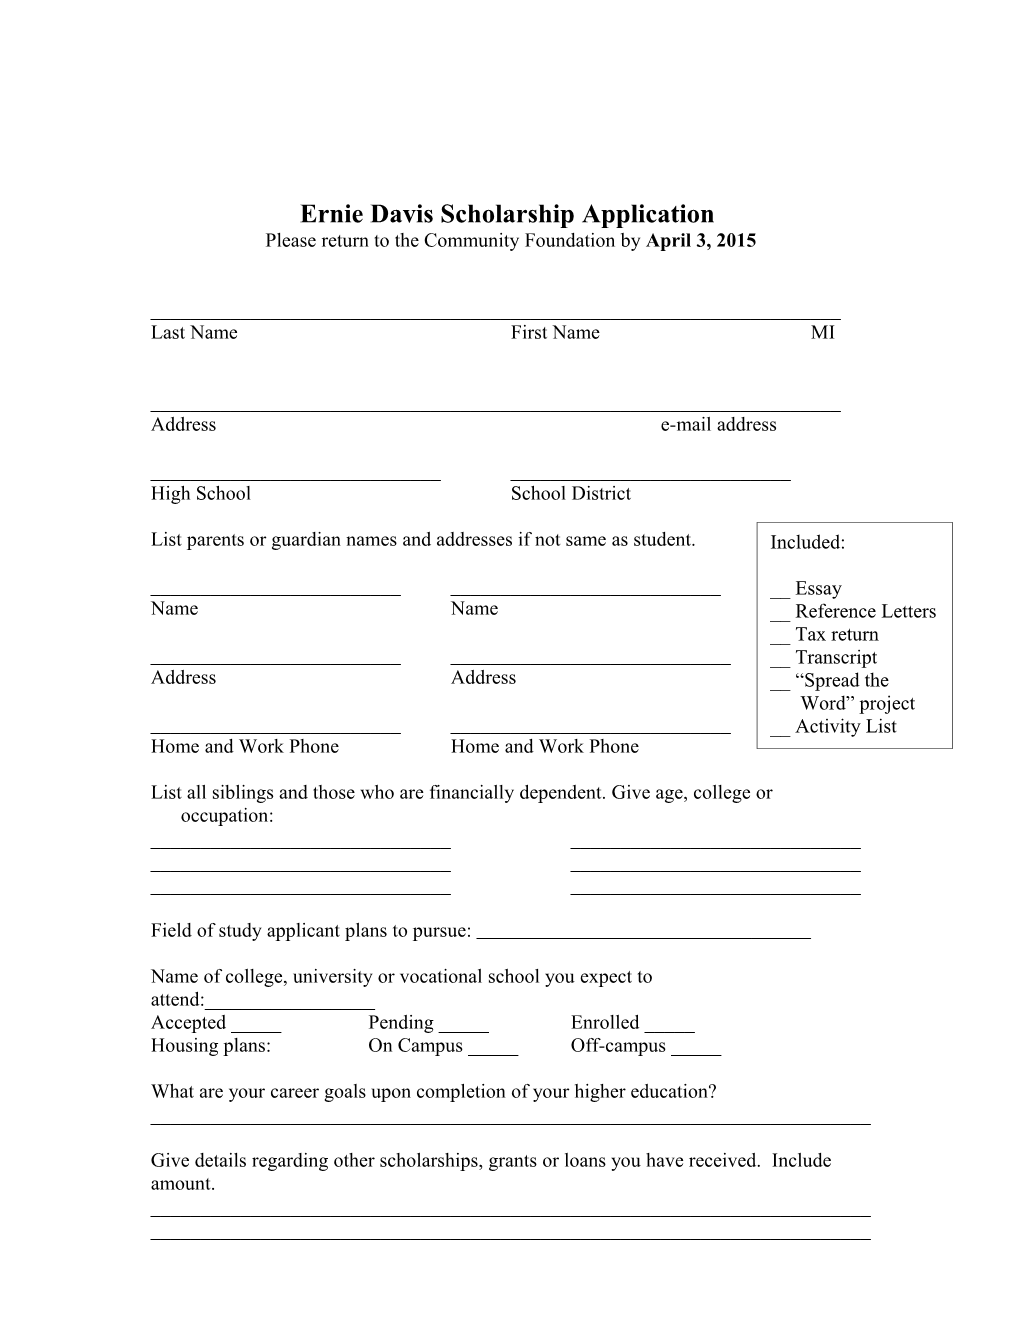 Ernie Davis Scholarship Application